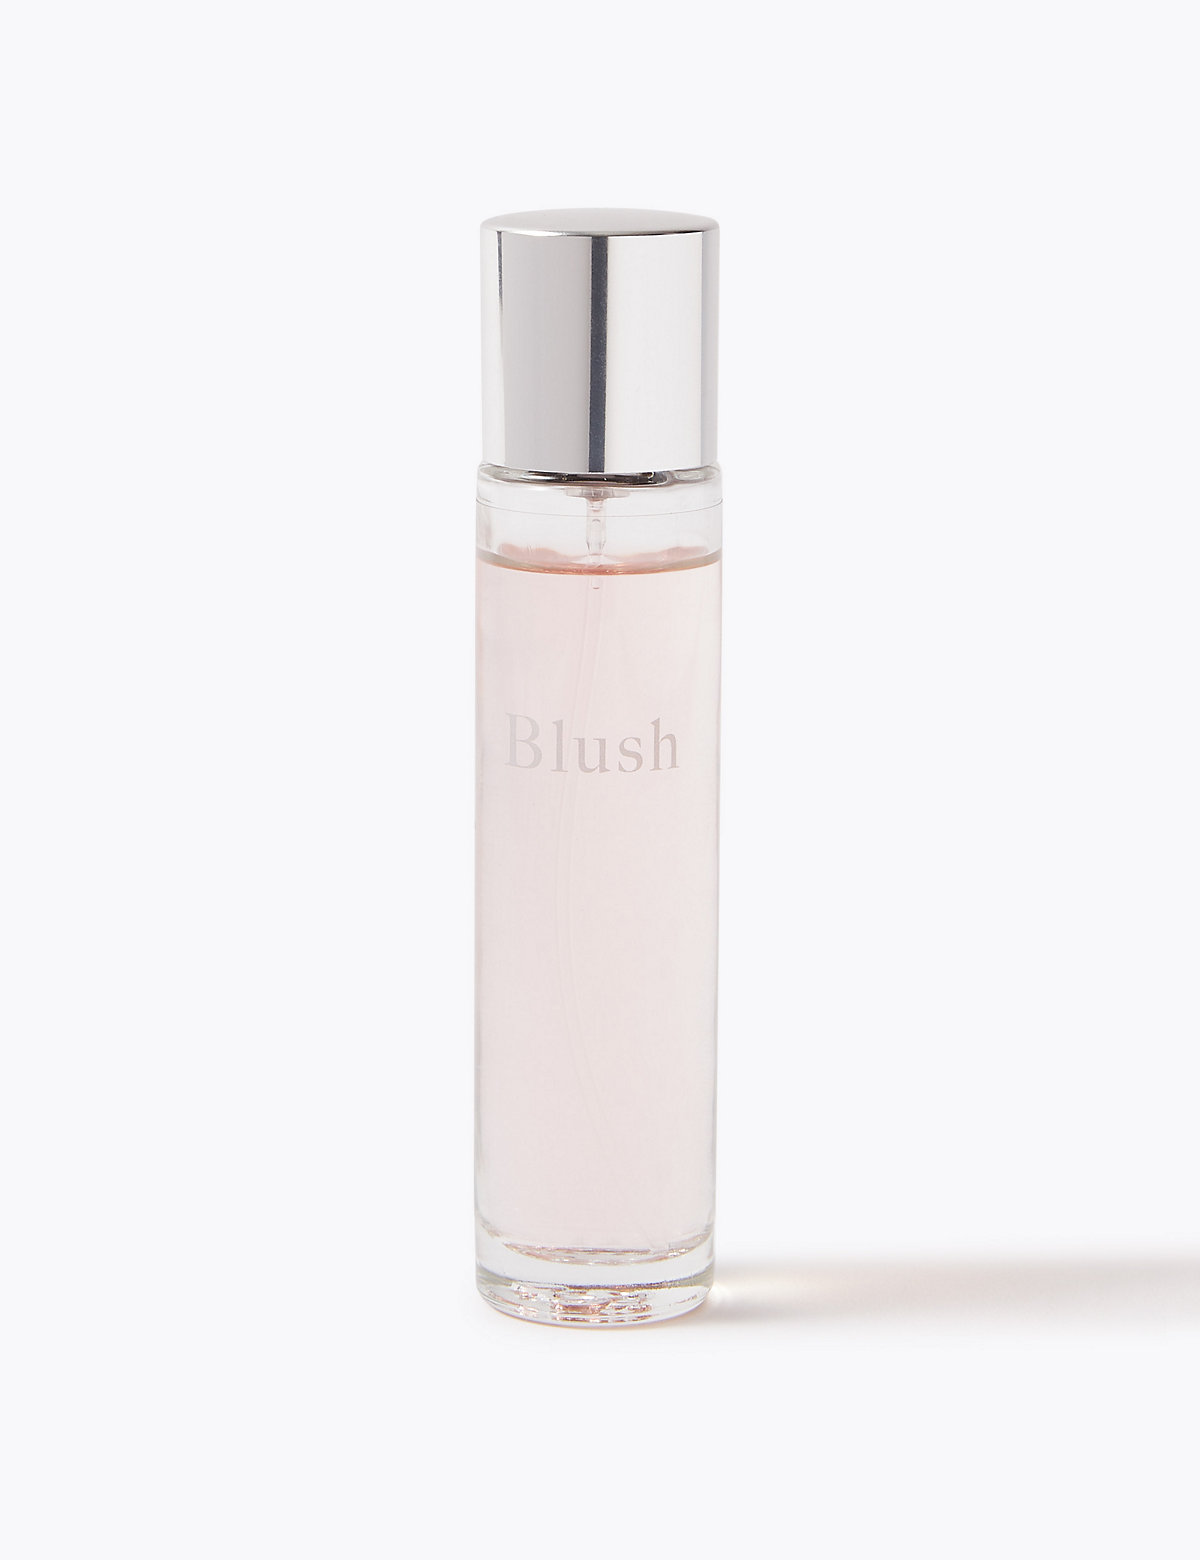 Blush Eau de Toilette Purse Spray 25ml